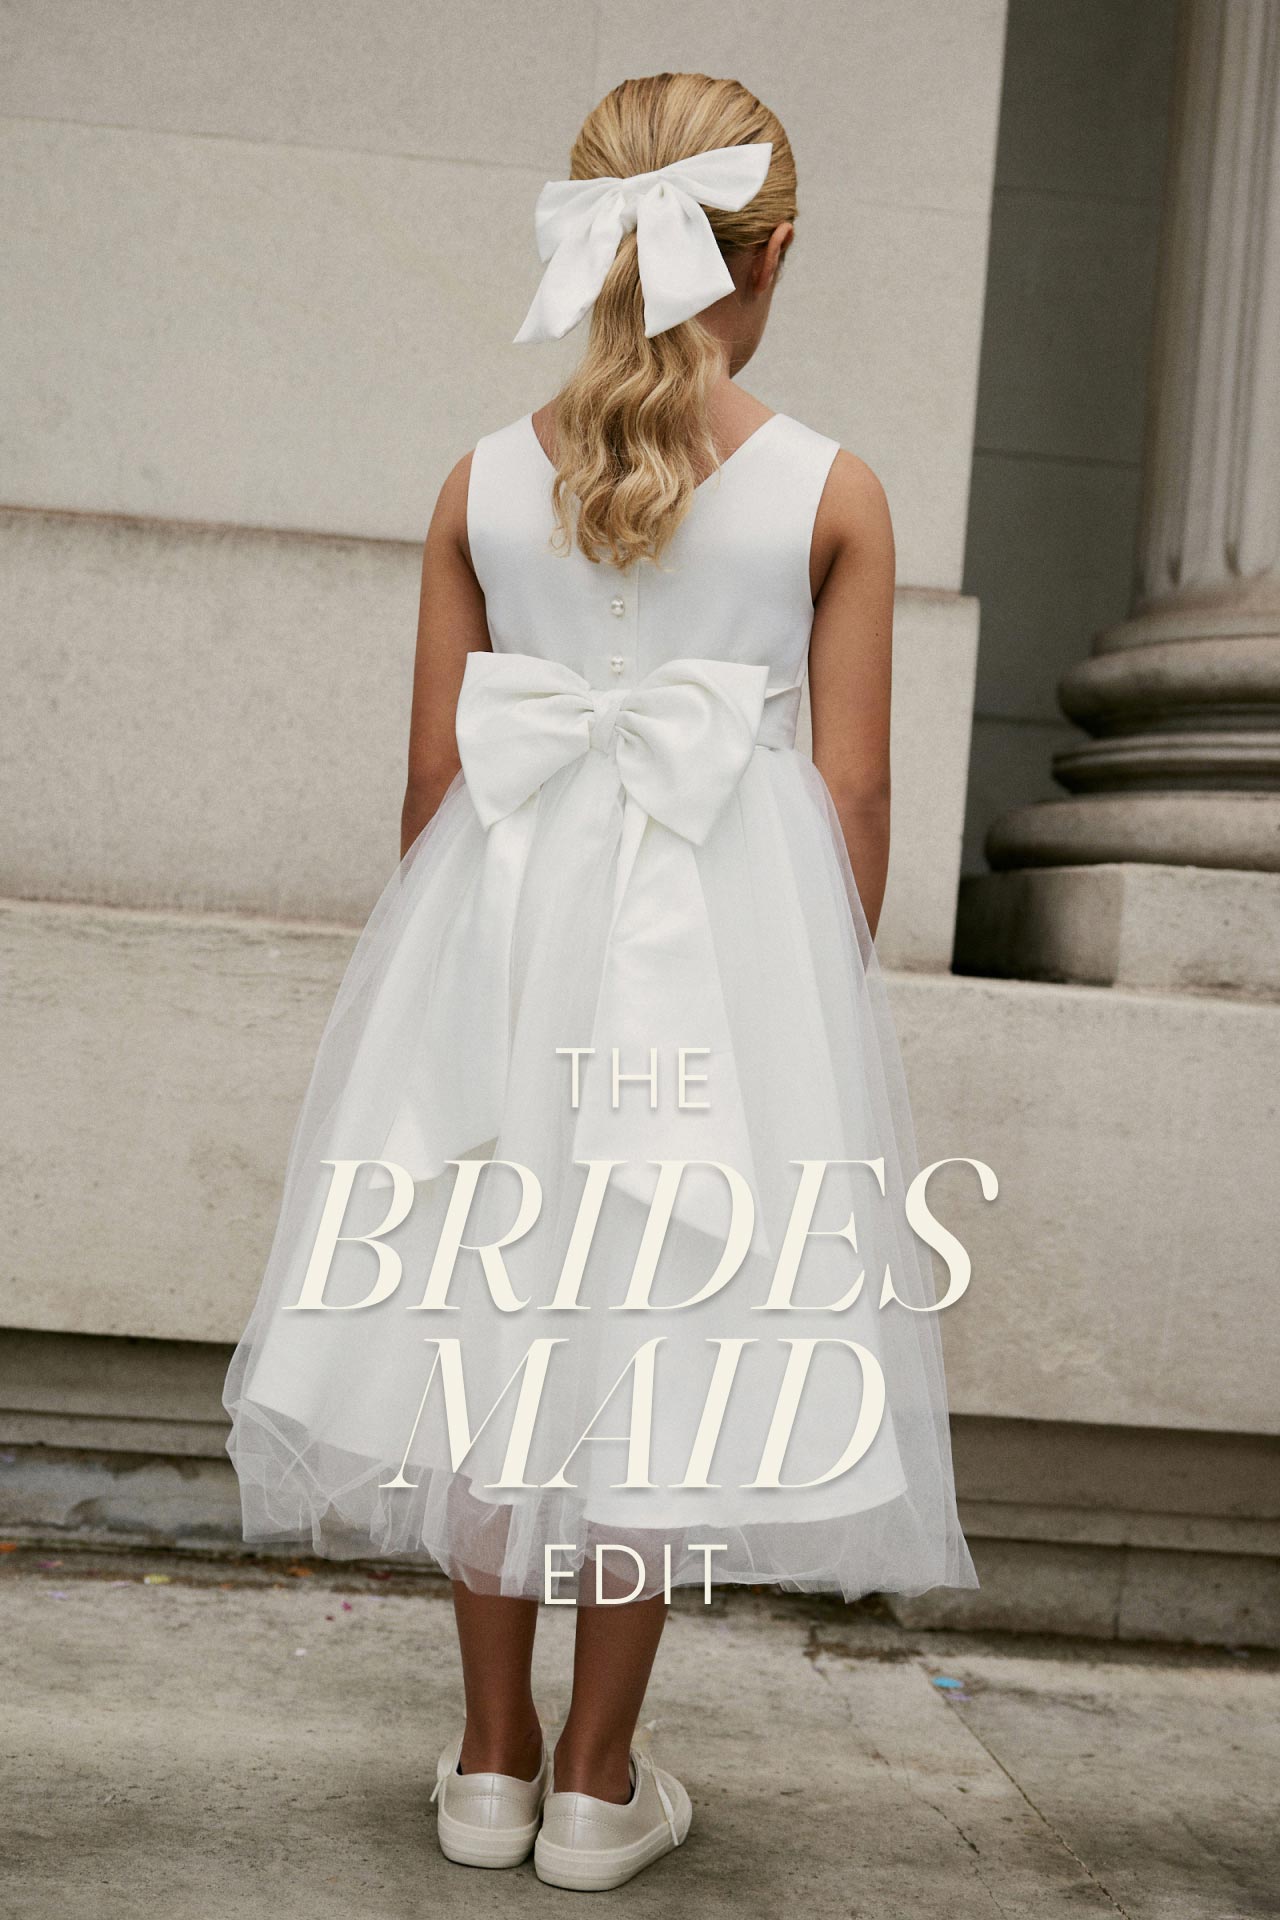 The Bridesmaid Edit